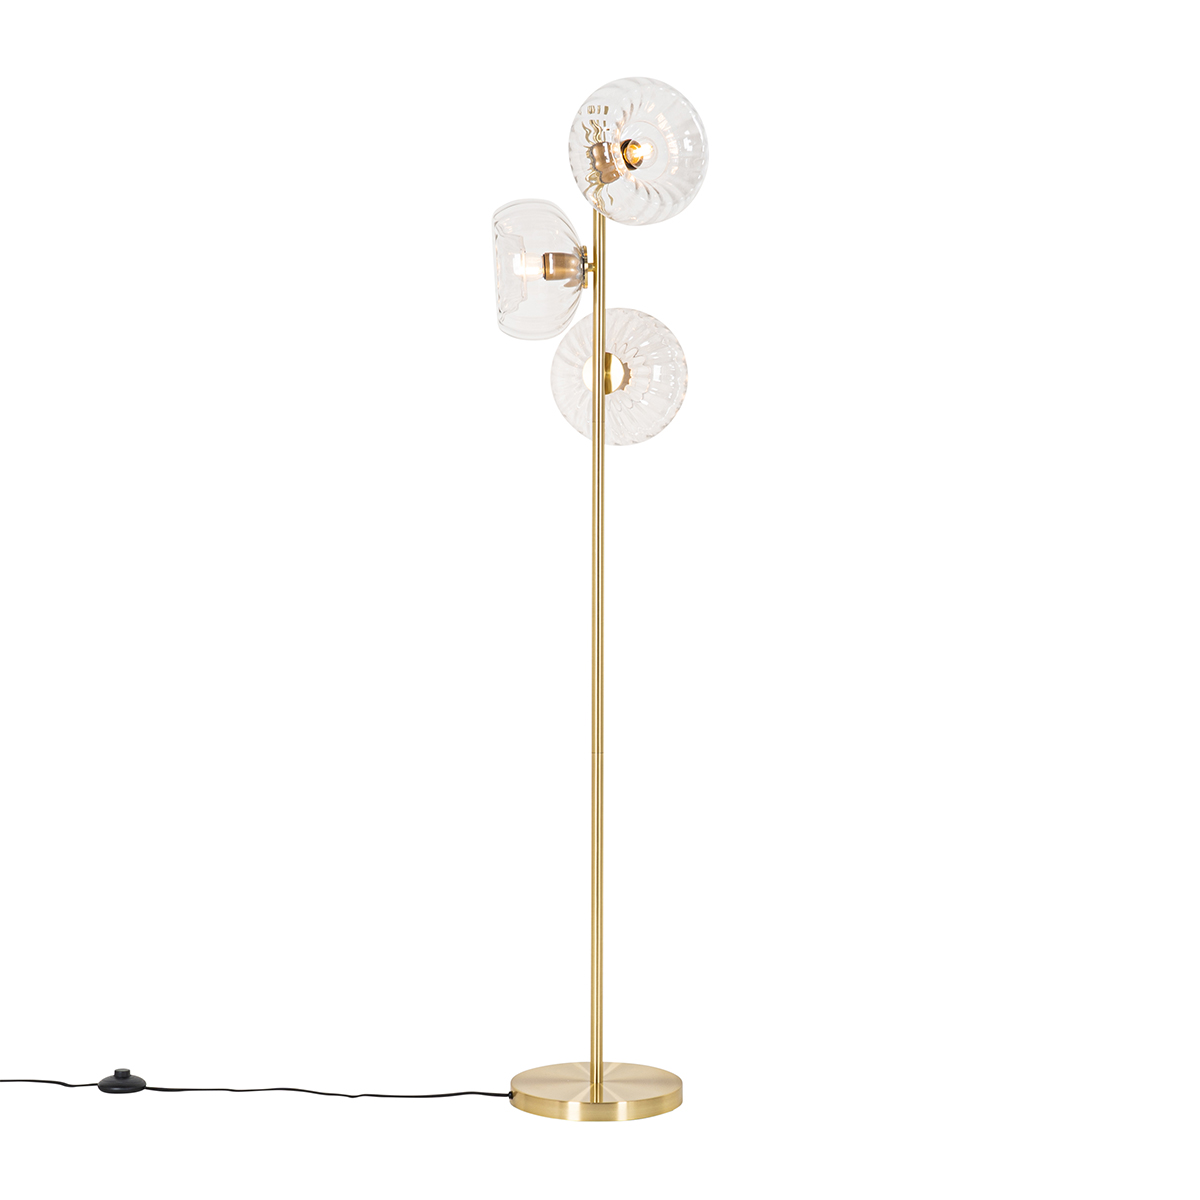 Stojacia lampa Art Deco zlatá so sklom 3 svetlá - Ayesha